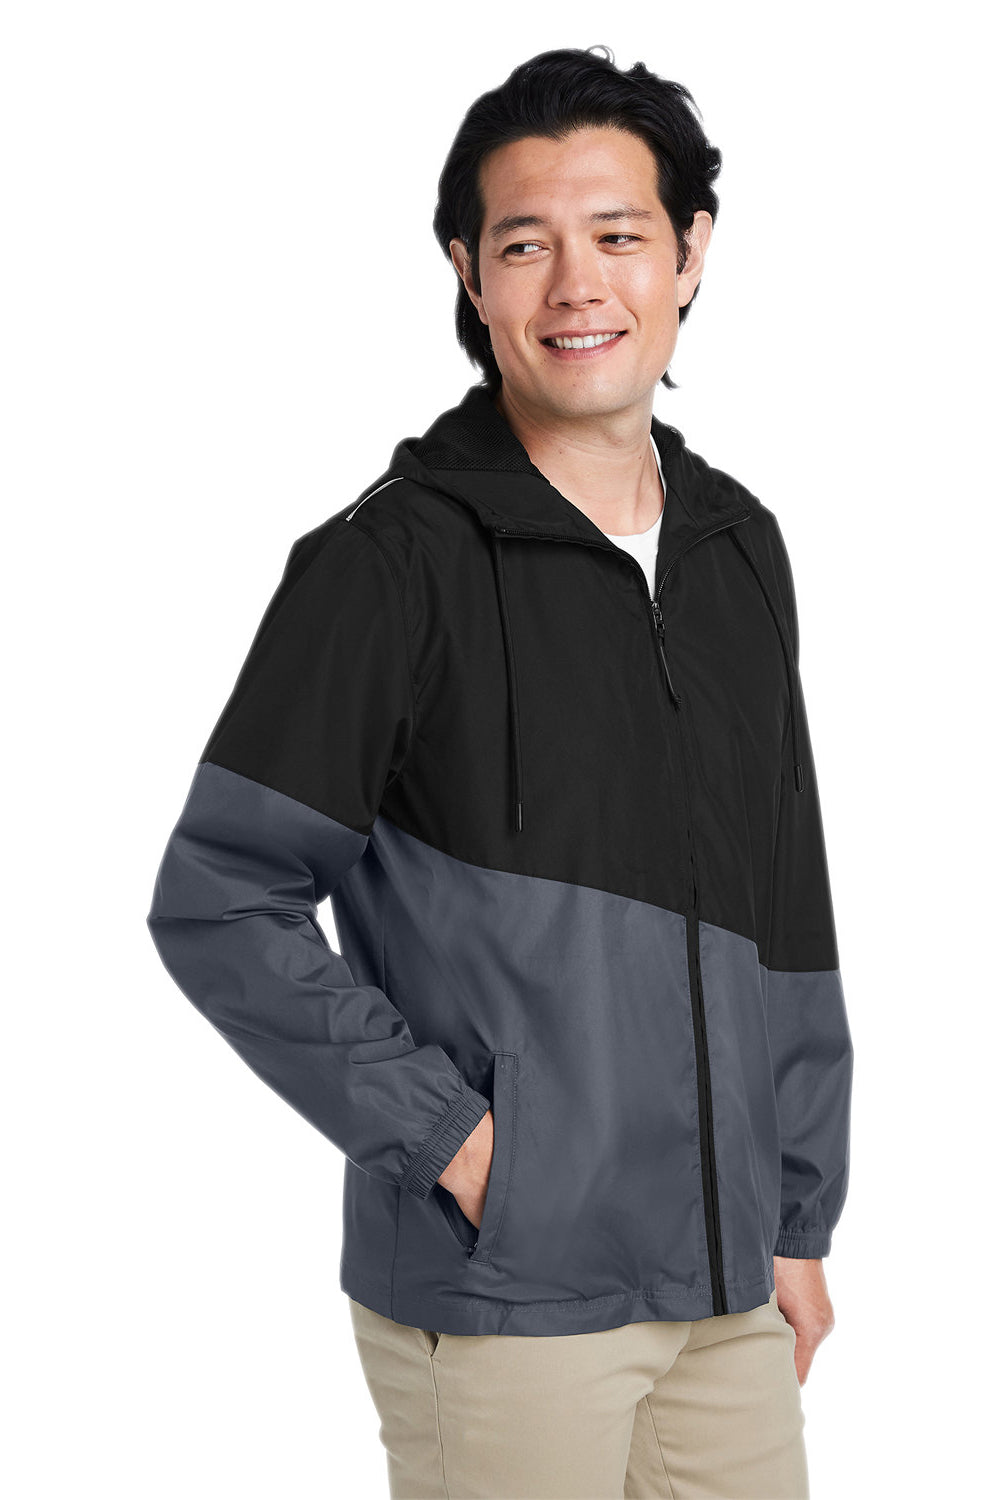 Core 365 CE710 Mens Techno Lite Colorblock Full Zip Windbreaker Jacket Black/Carbon Grey 3Q